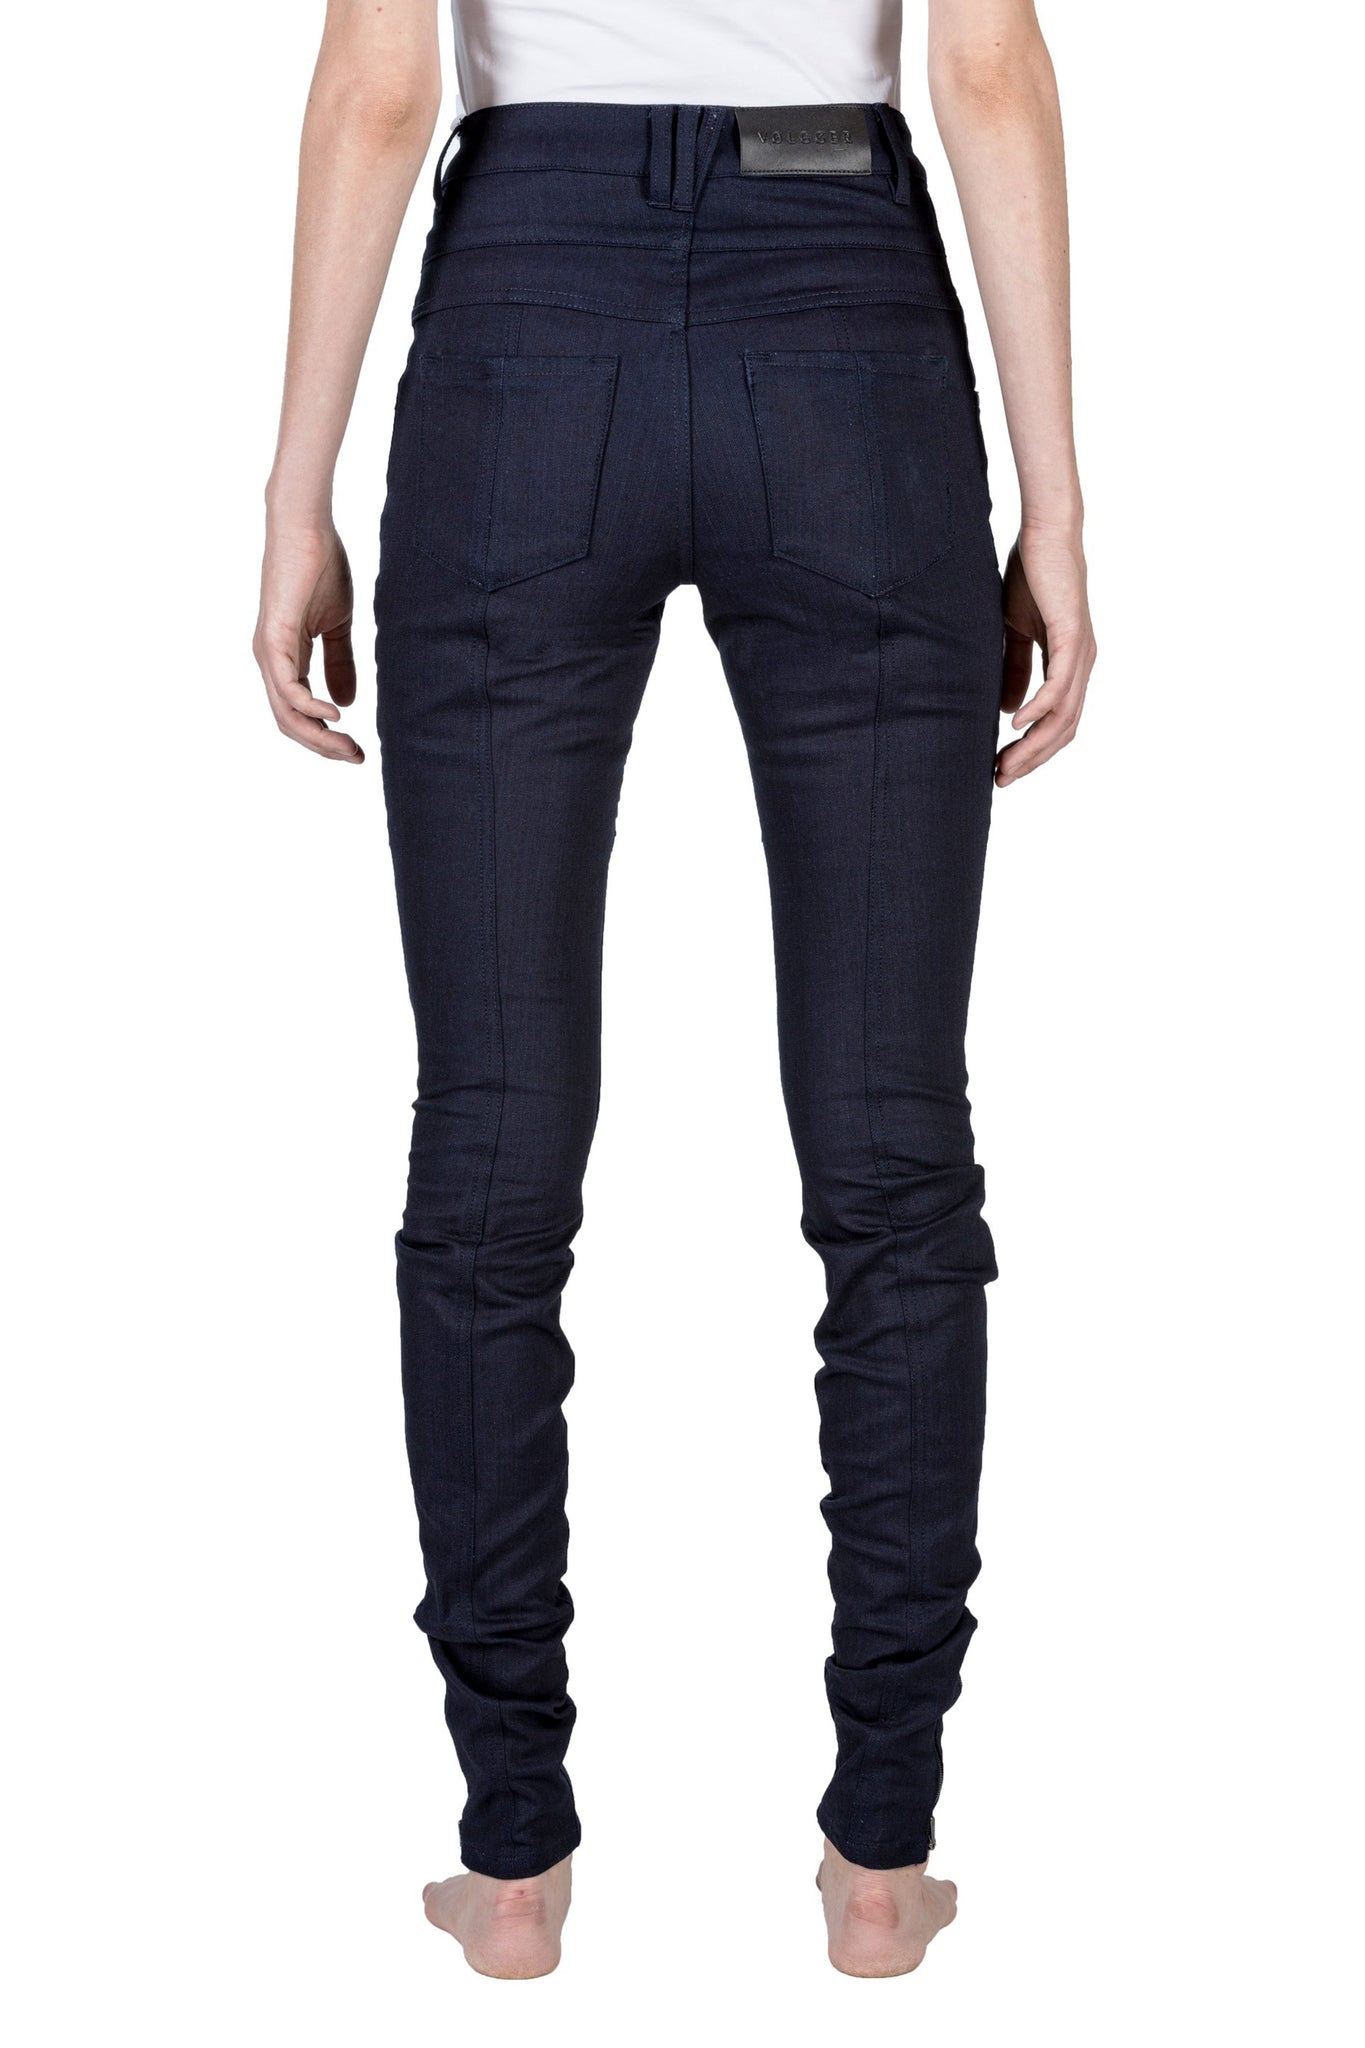 Second Choice - Ash Skinny Highwaist Jeans Blue